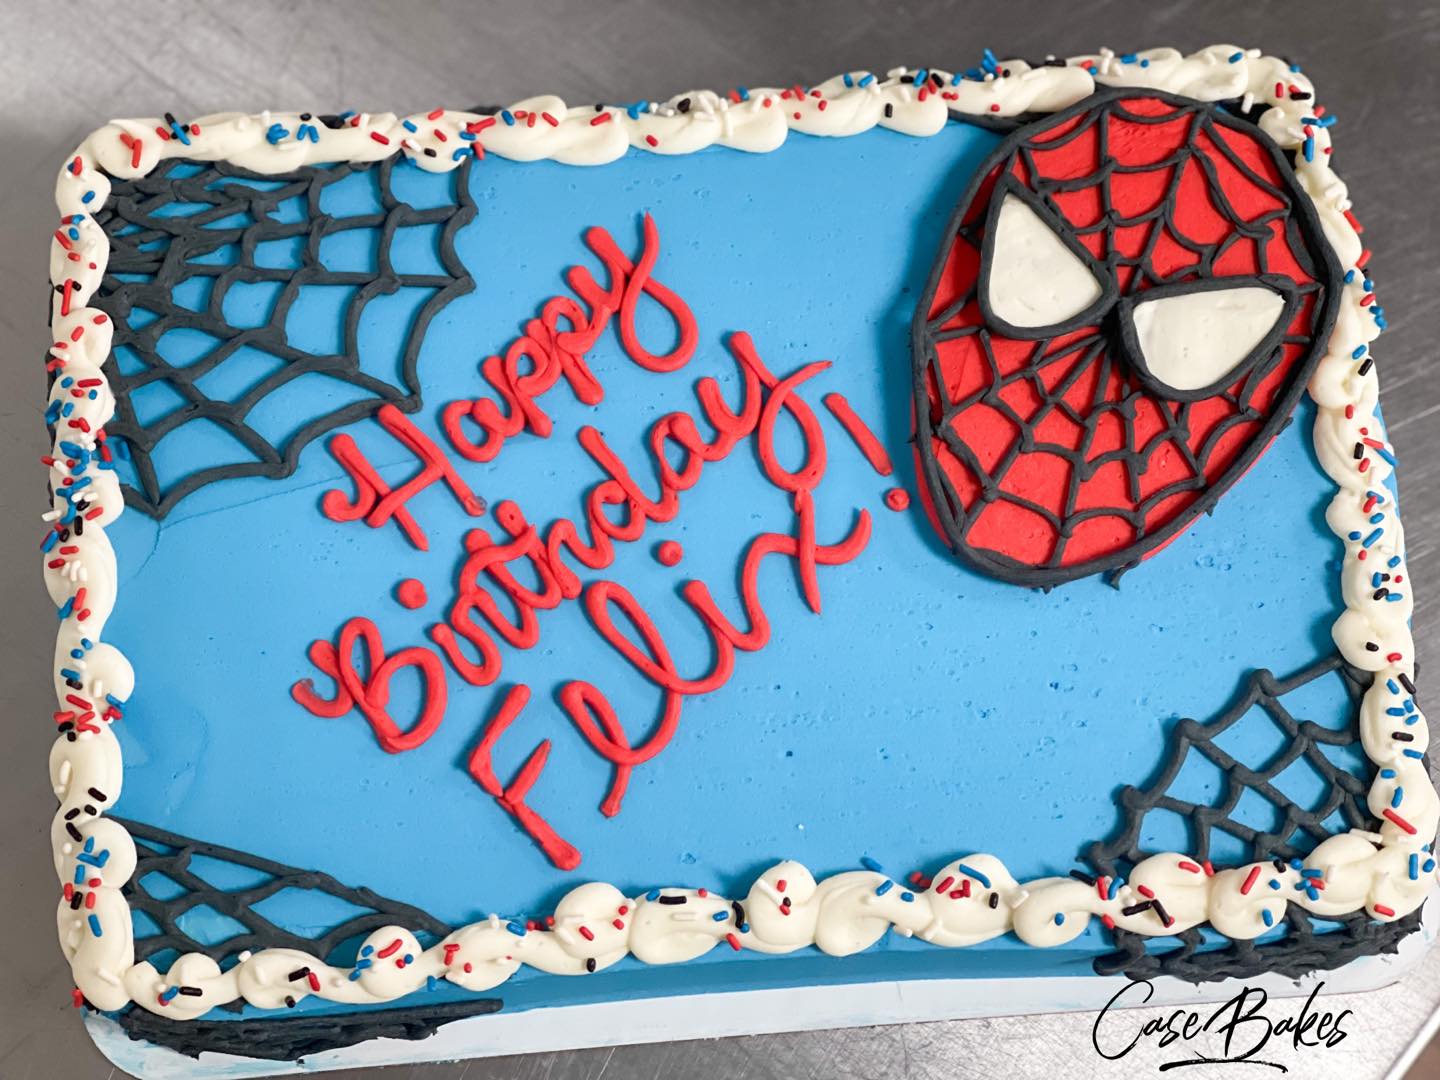 Buy The Iconic Spiderman Fondant Cake -The Iconic Spiderman Fondant Cake